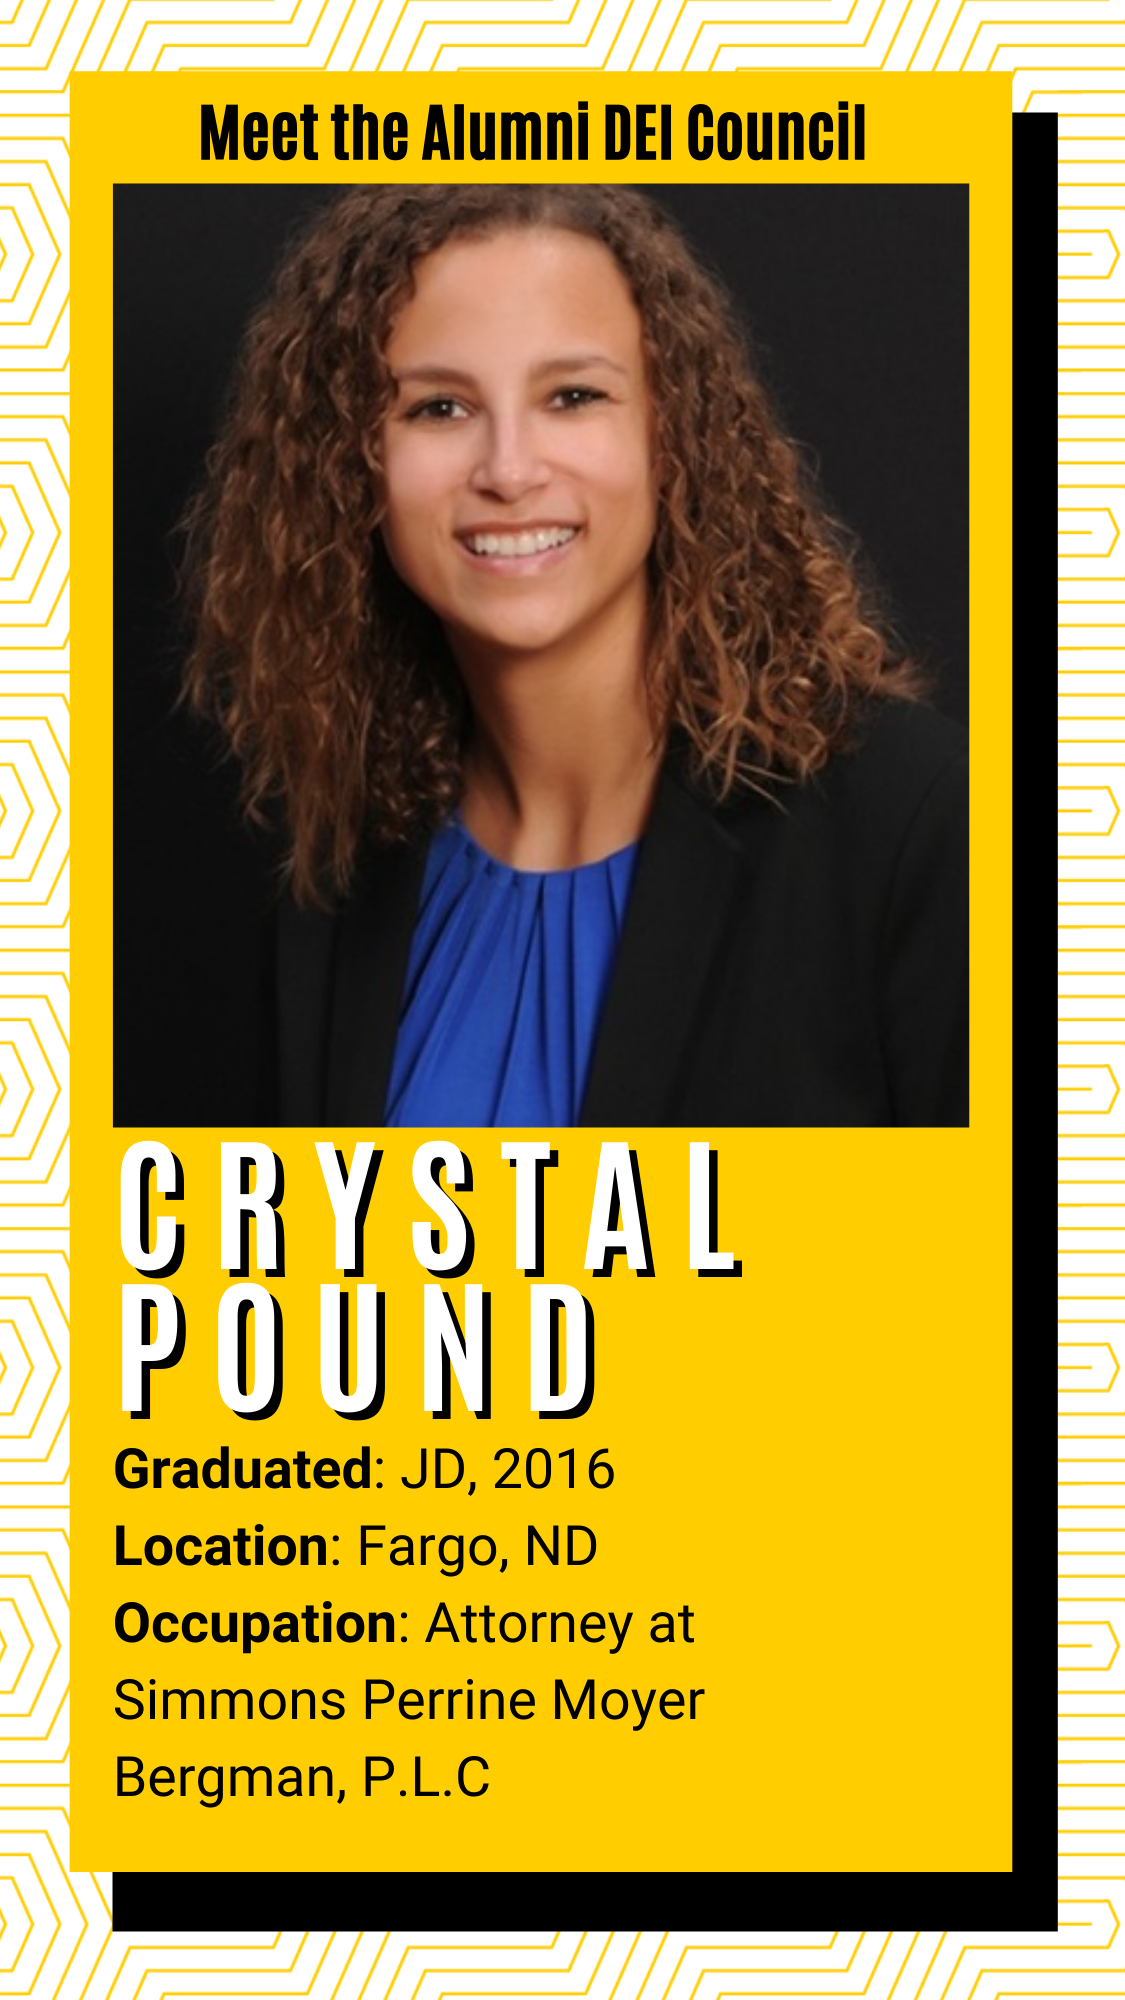 Meet the alumni DEI Council - Crystal Pound